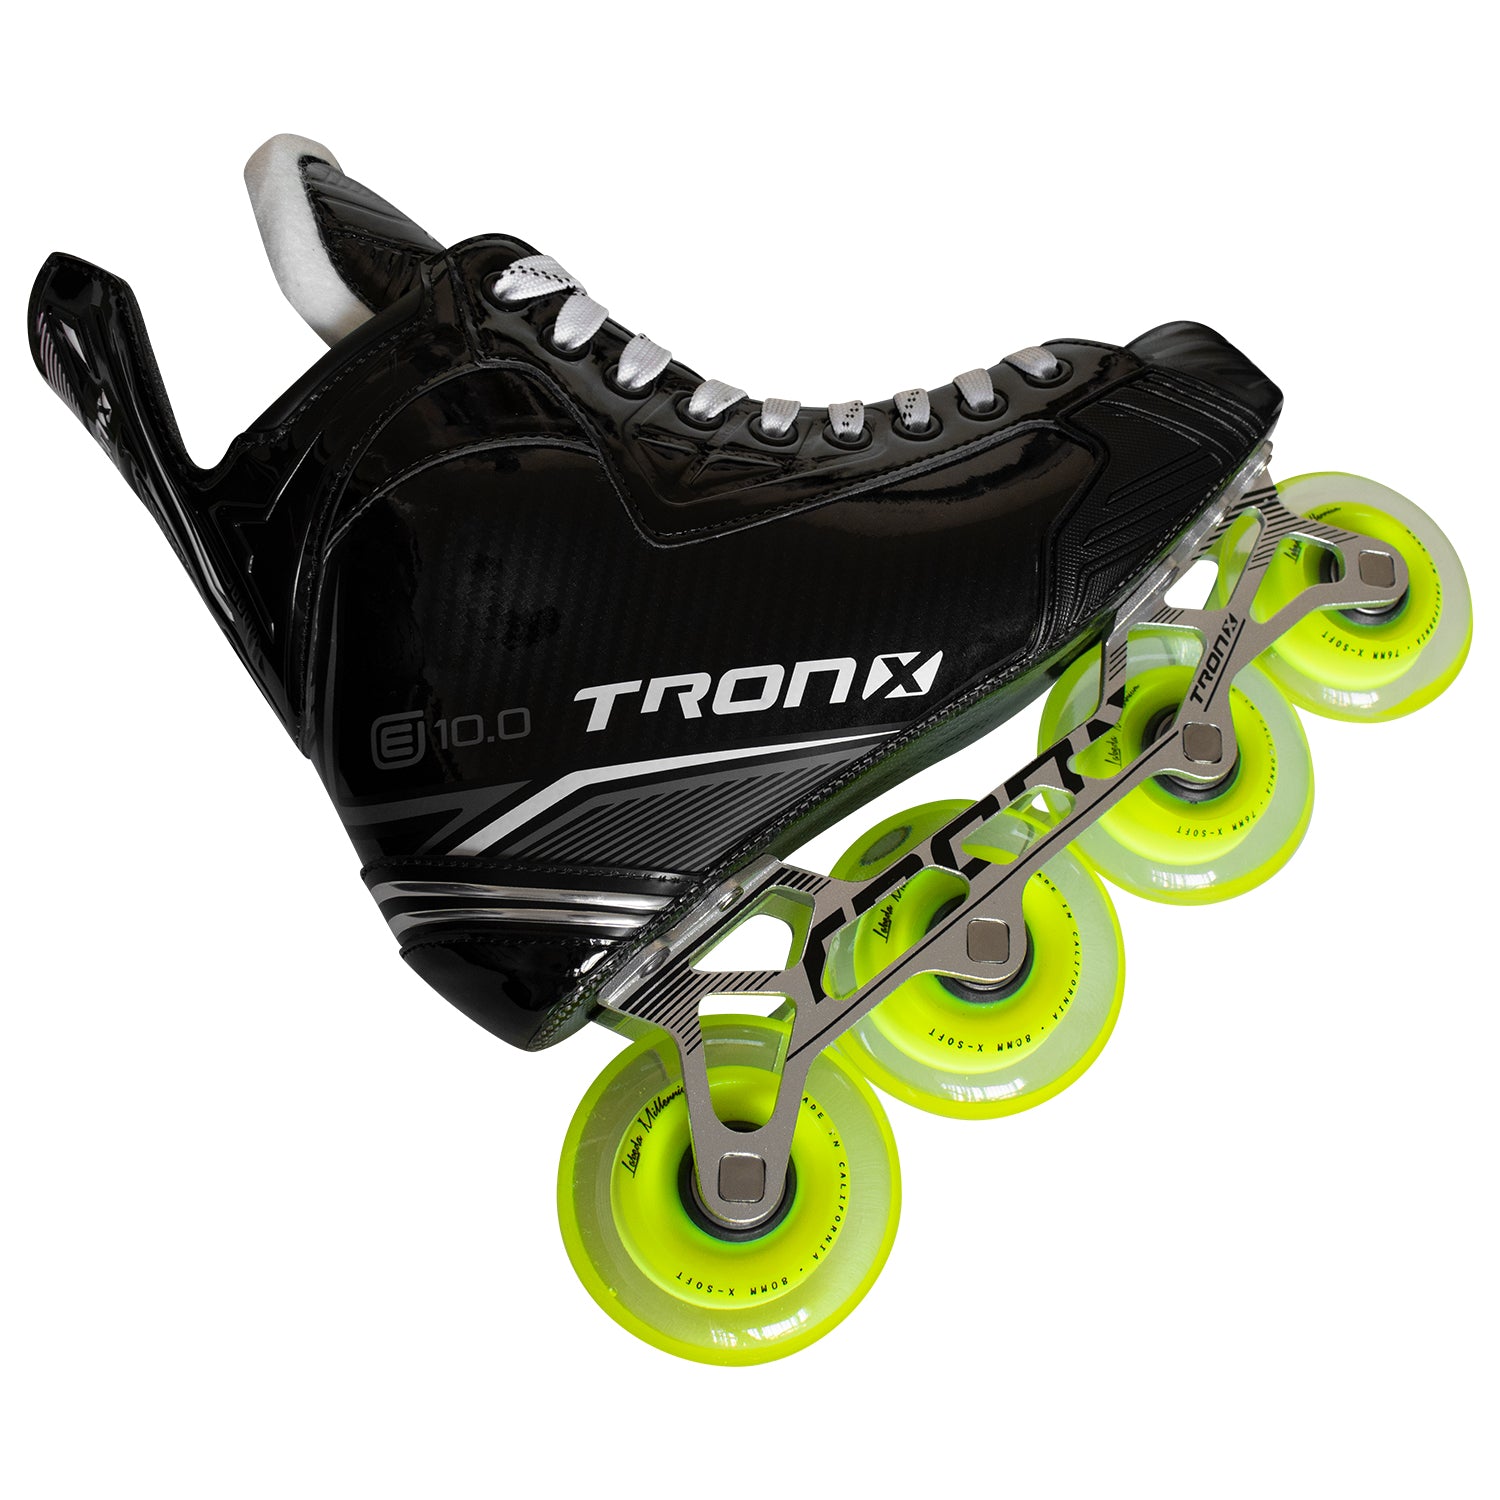 TronX E10.0 Senior Inline Senior Hockey Skates